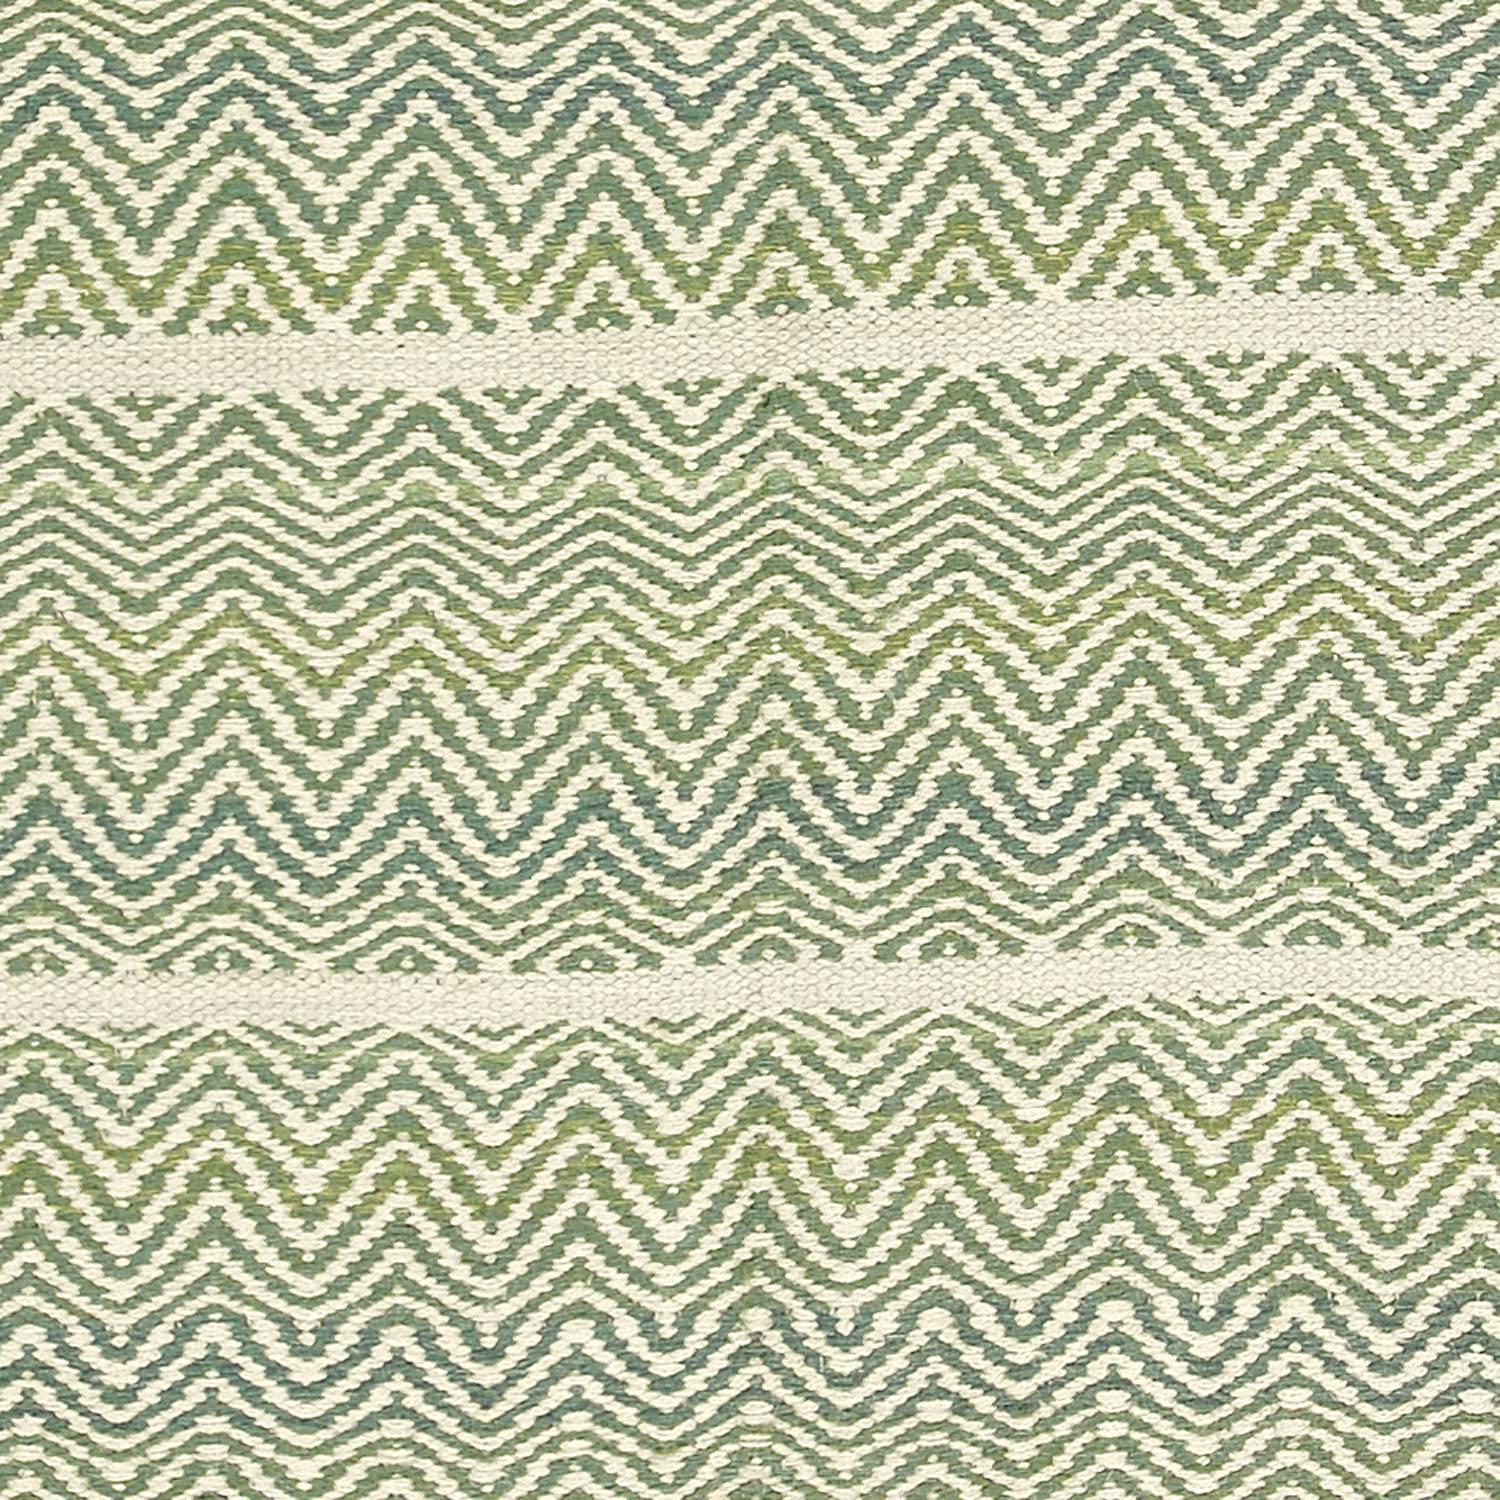 Mid-20th century Swedish flat-weave carpet, initialed 